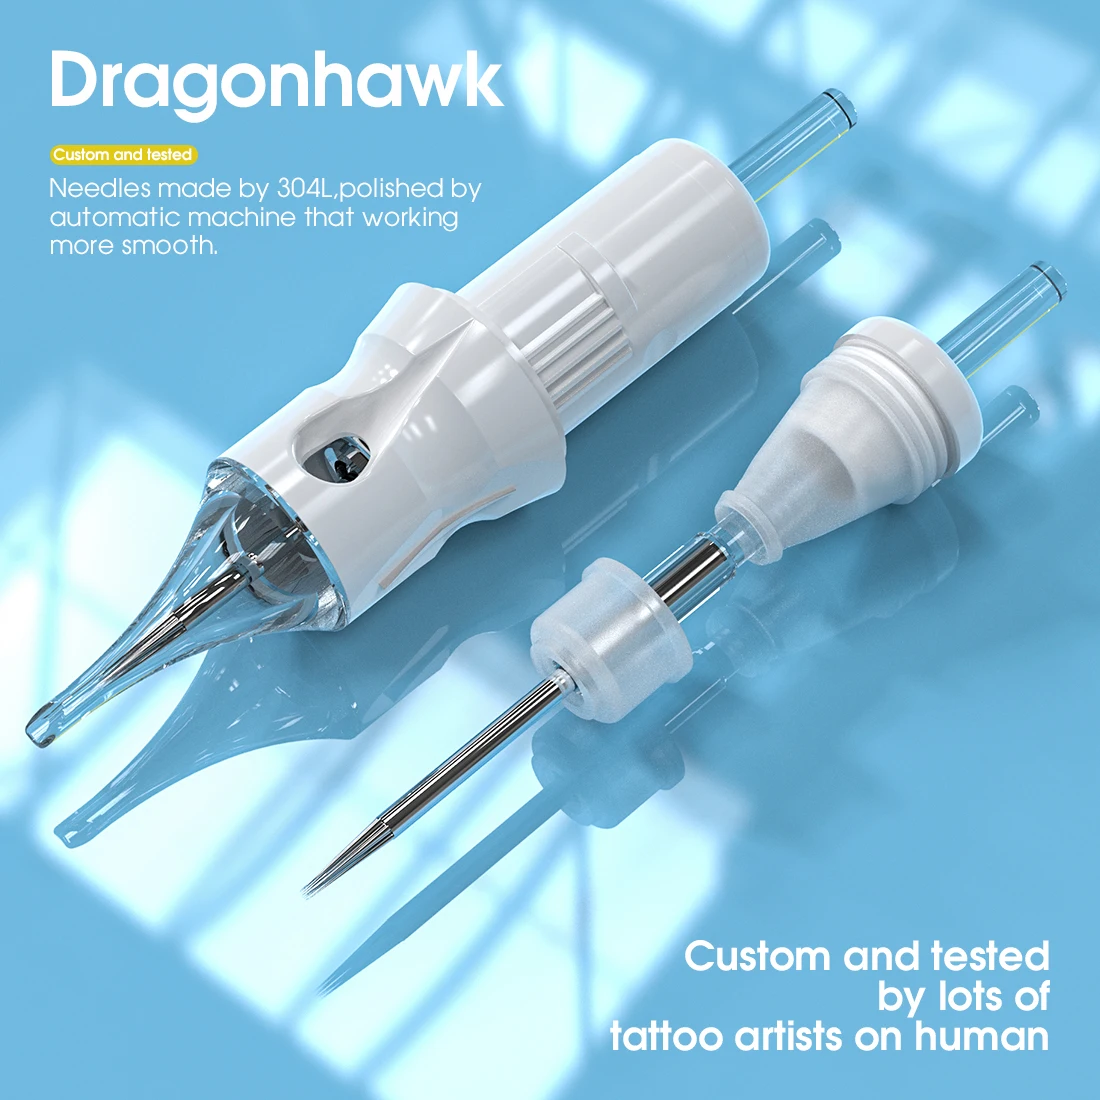 Dragonhawk X7 Tattoo AI Display Wireless Pen Machine Kit Professional Brushless Motor Pen Tattoo Supplies Cartridge Set images - 6